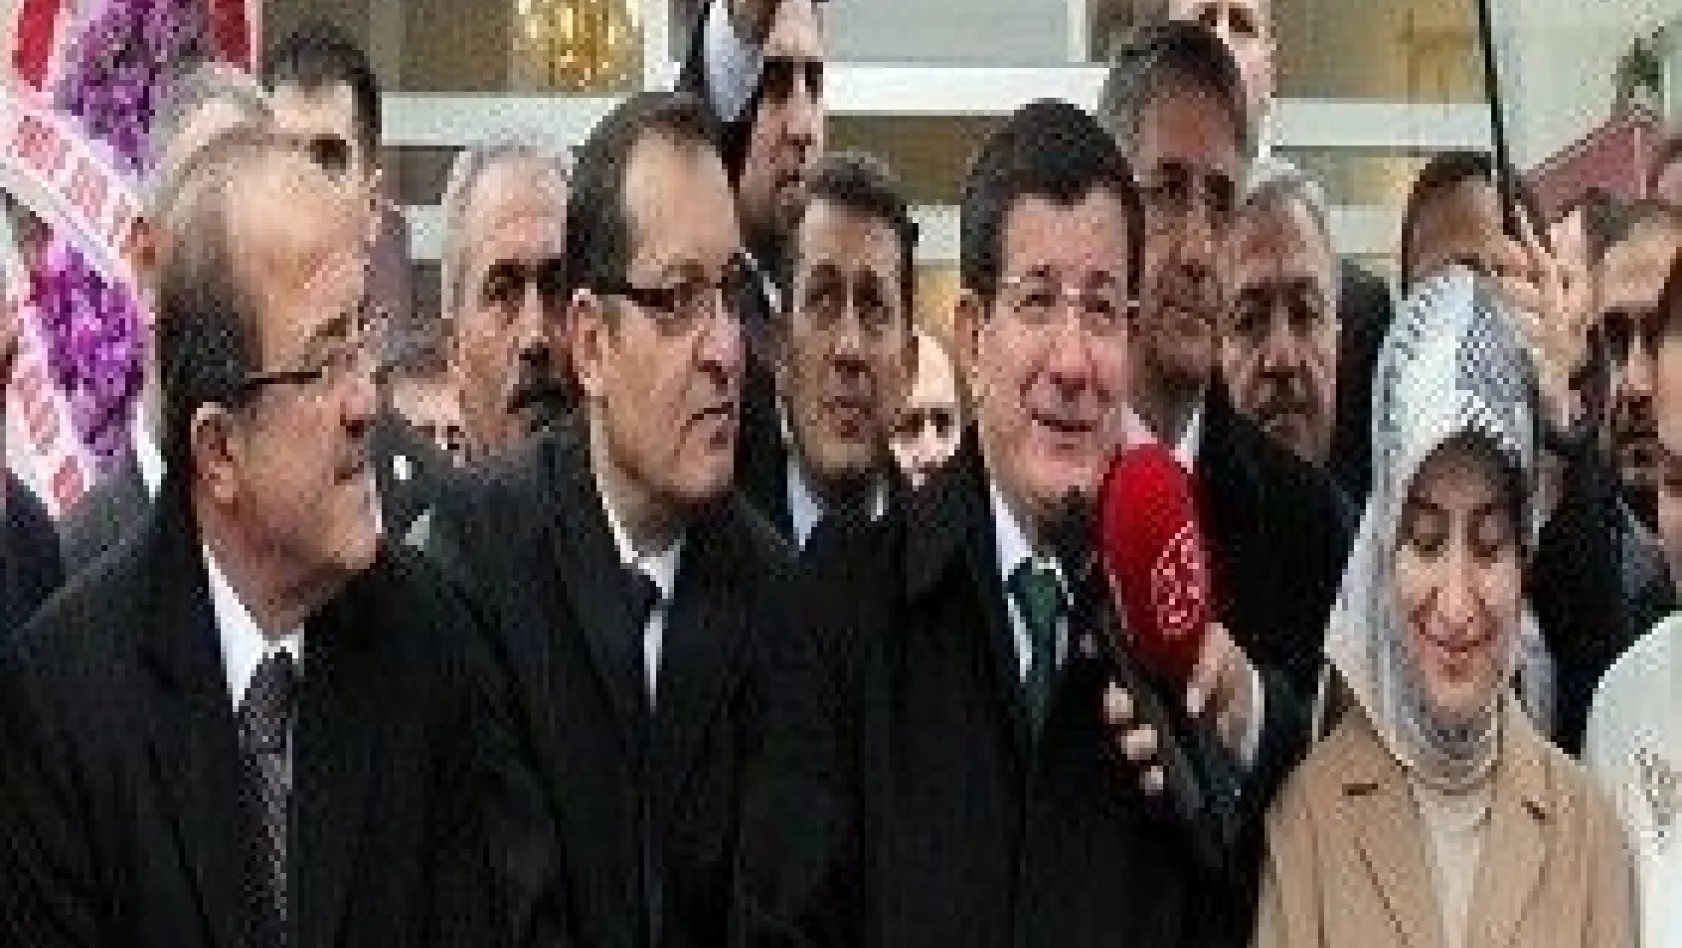 Başbakan Davutoğlu Elazığ'da